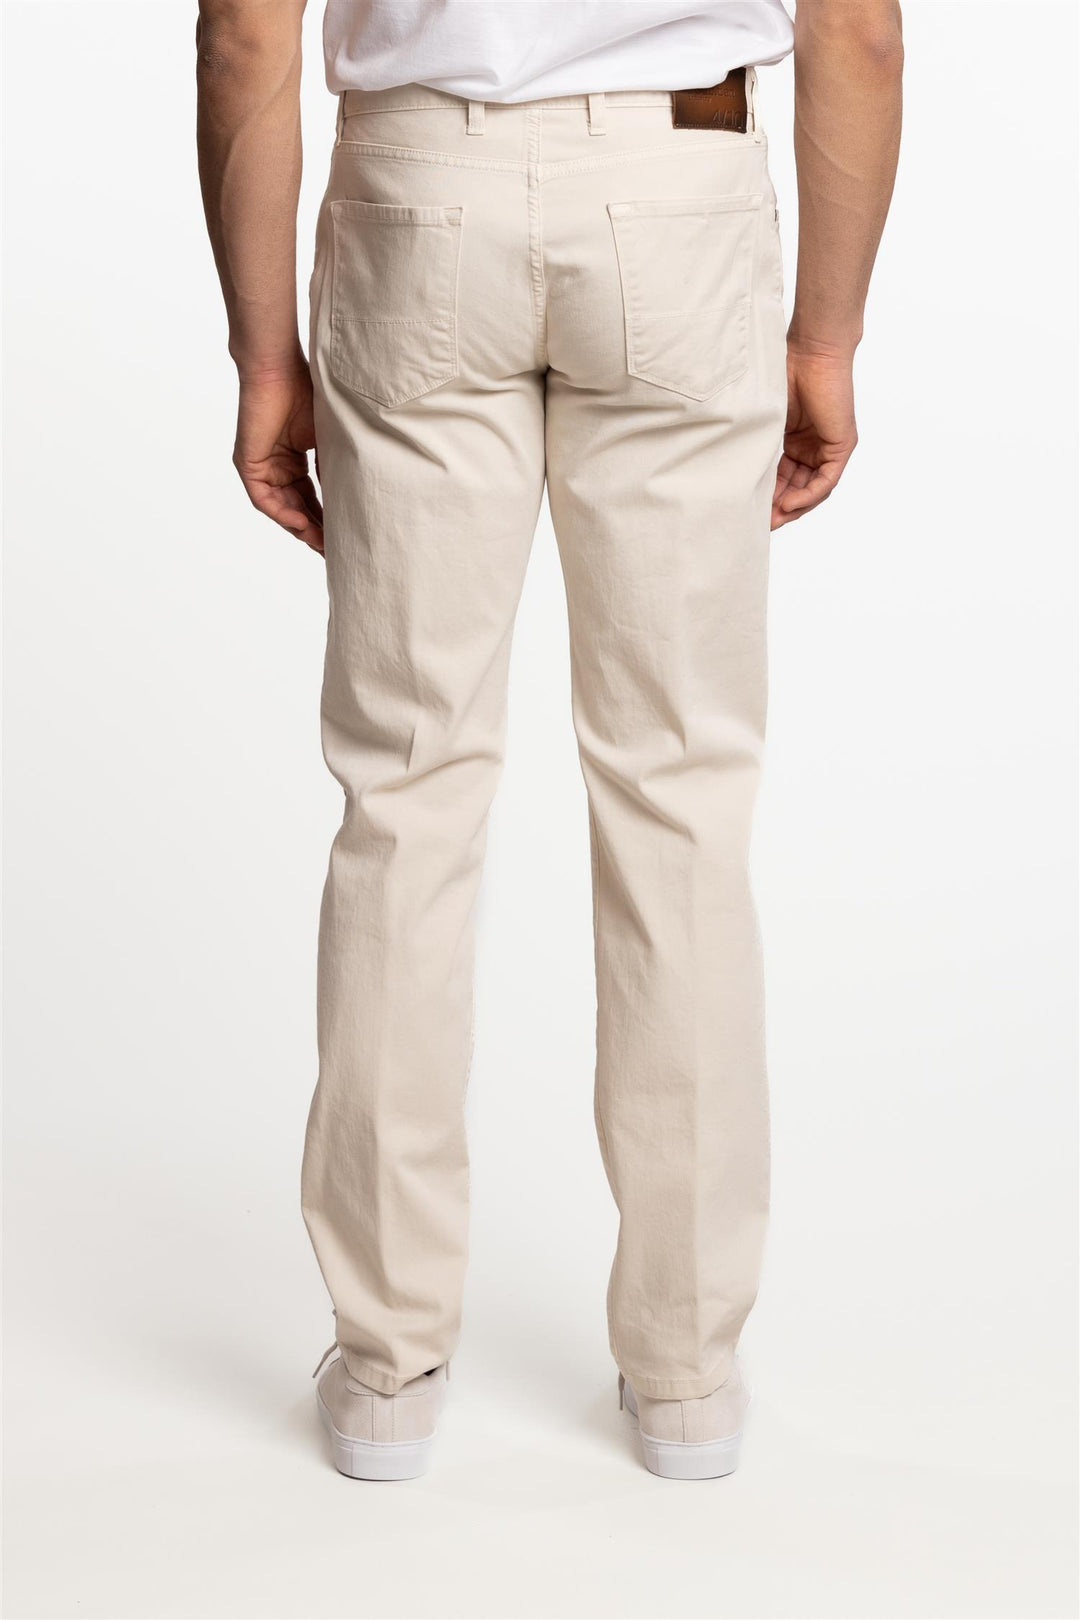 5-Pocket Cotton/Stretch Pant Beige